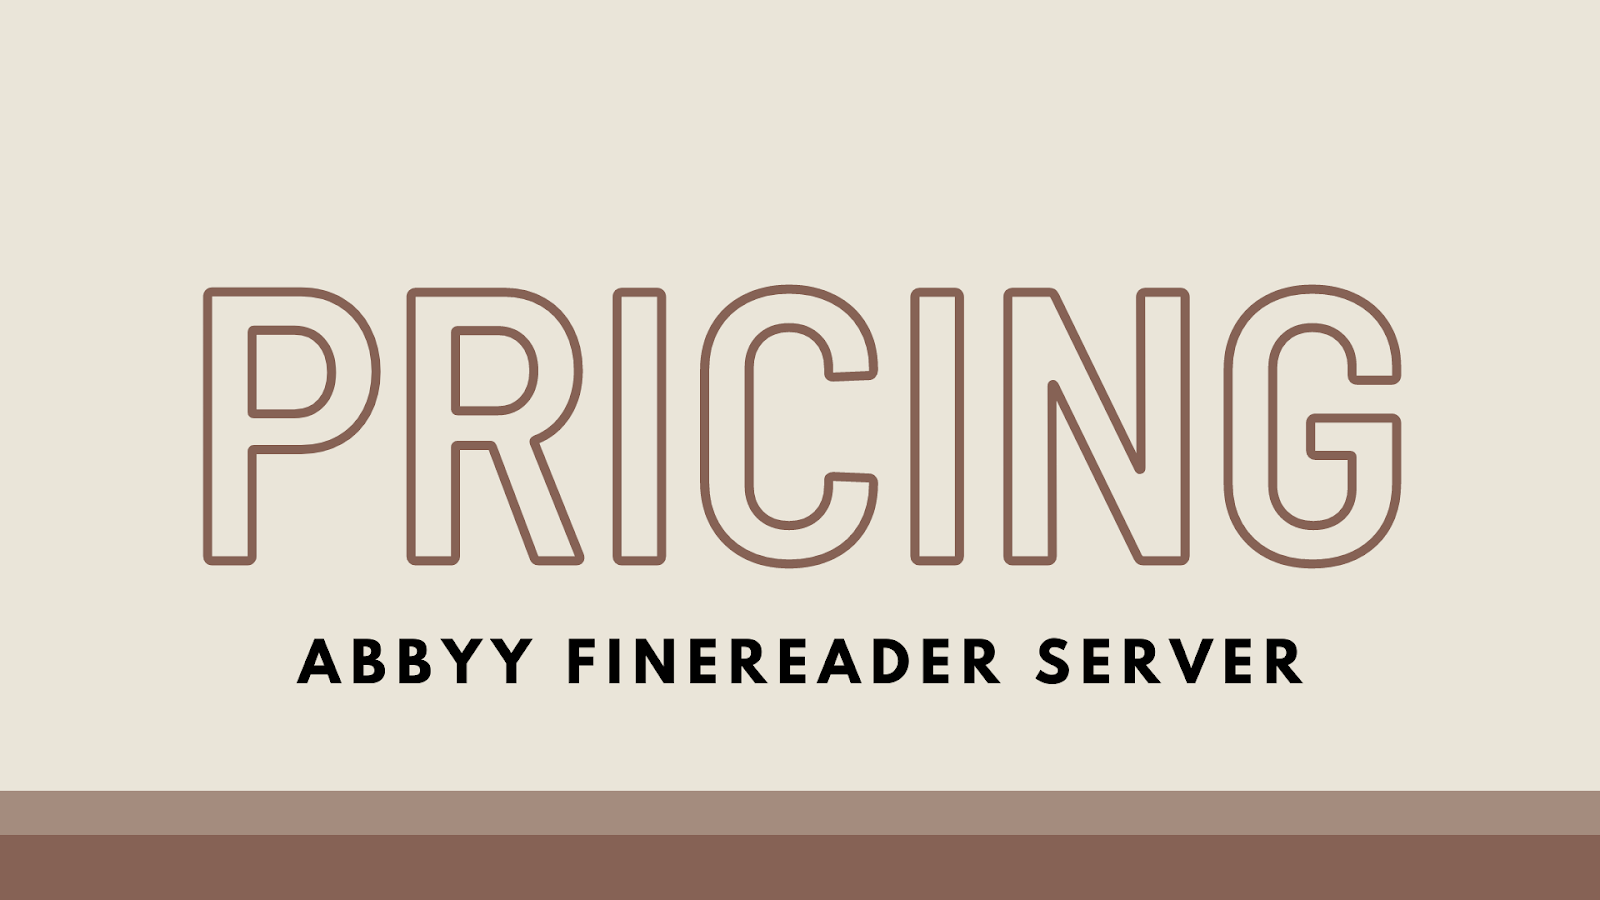 ABBYY FineReader Server Pricing